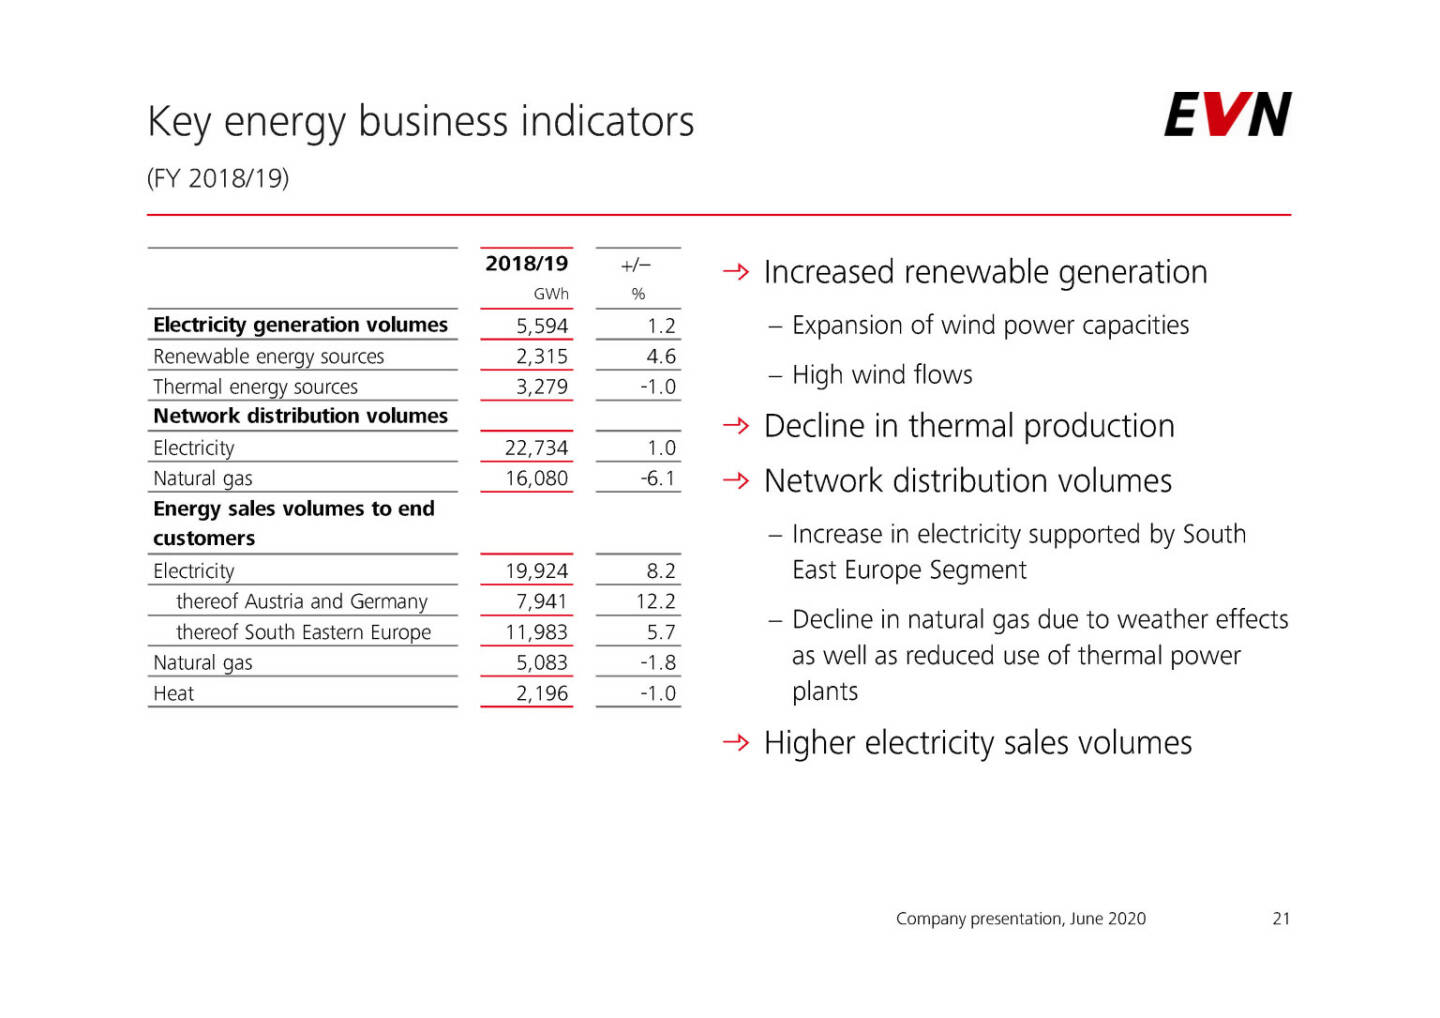 EVN - Key energy business indicators